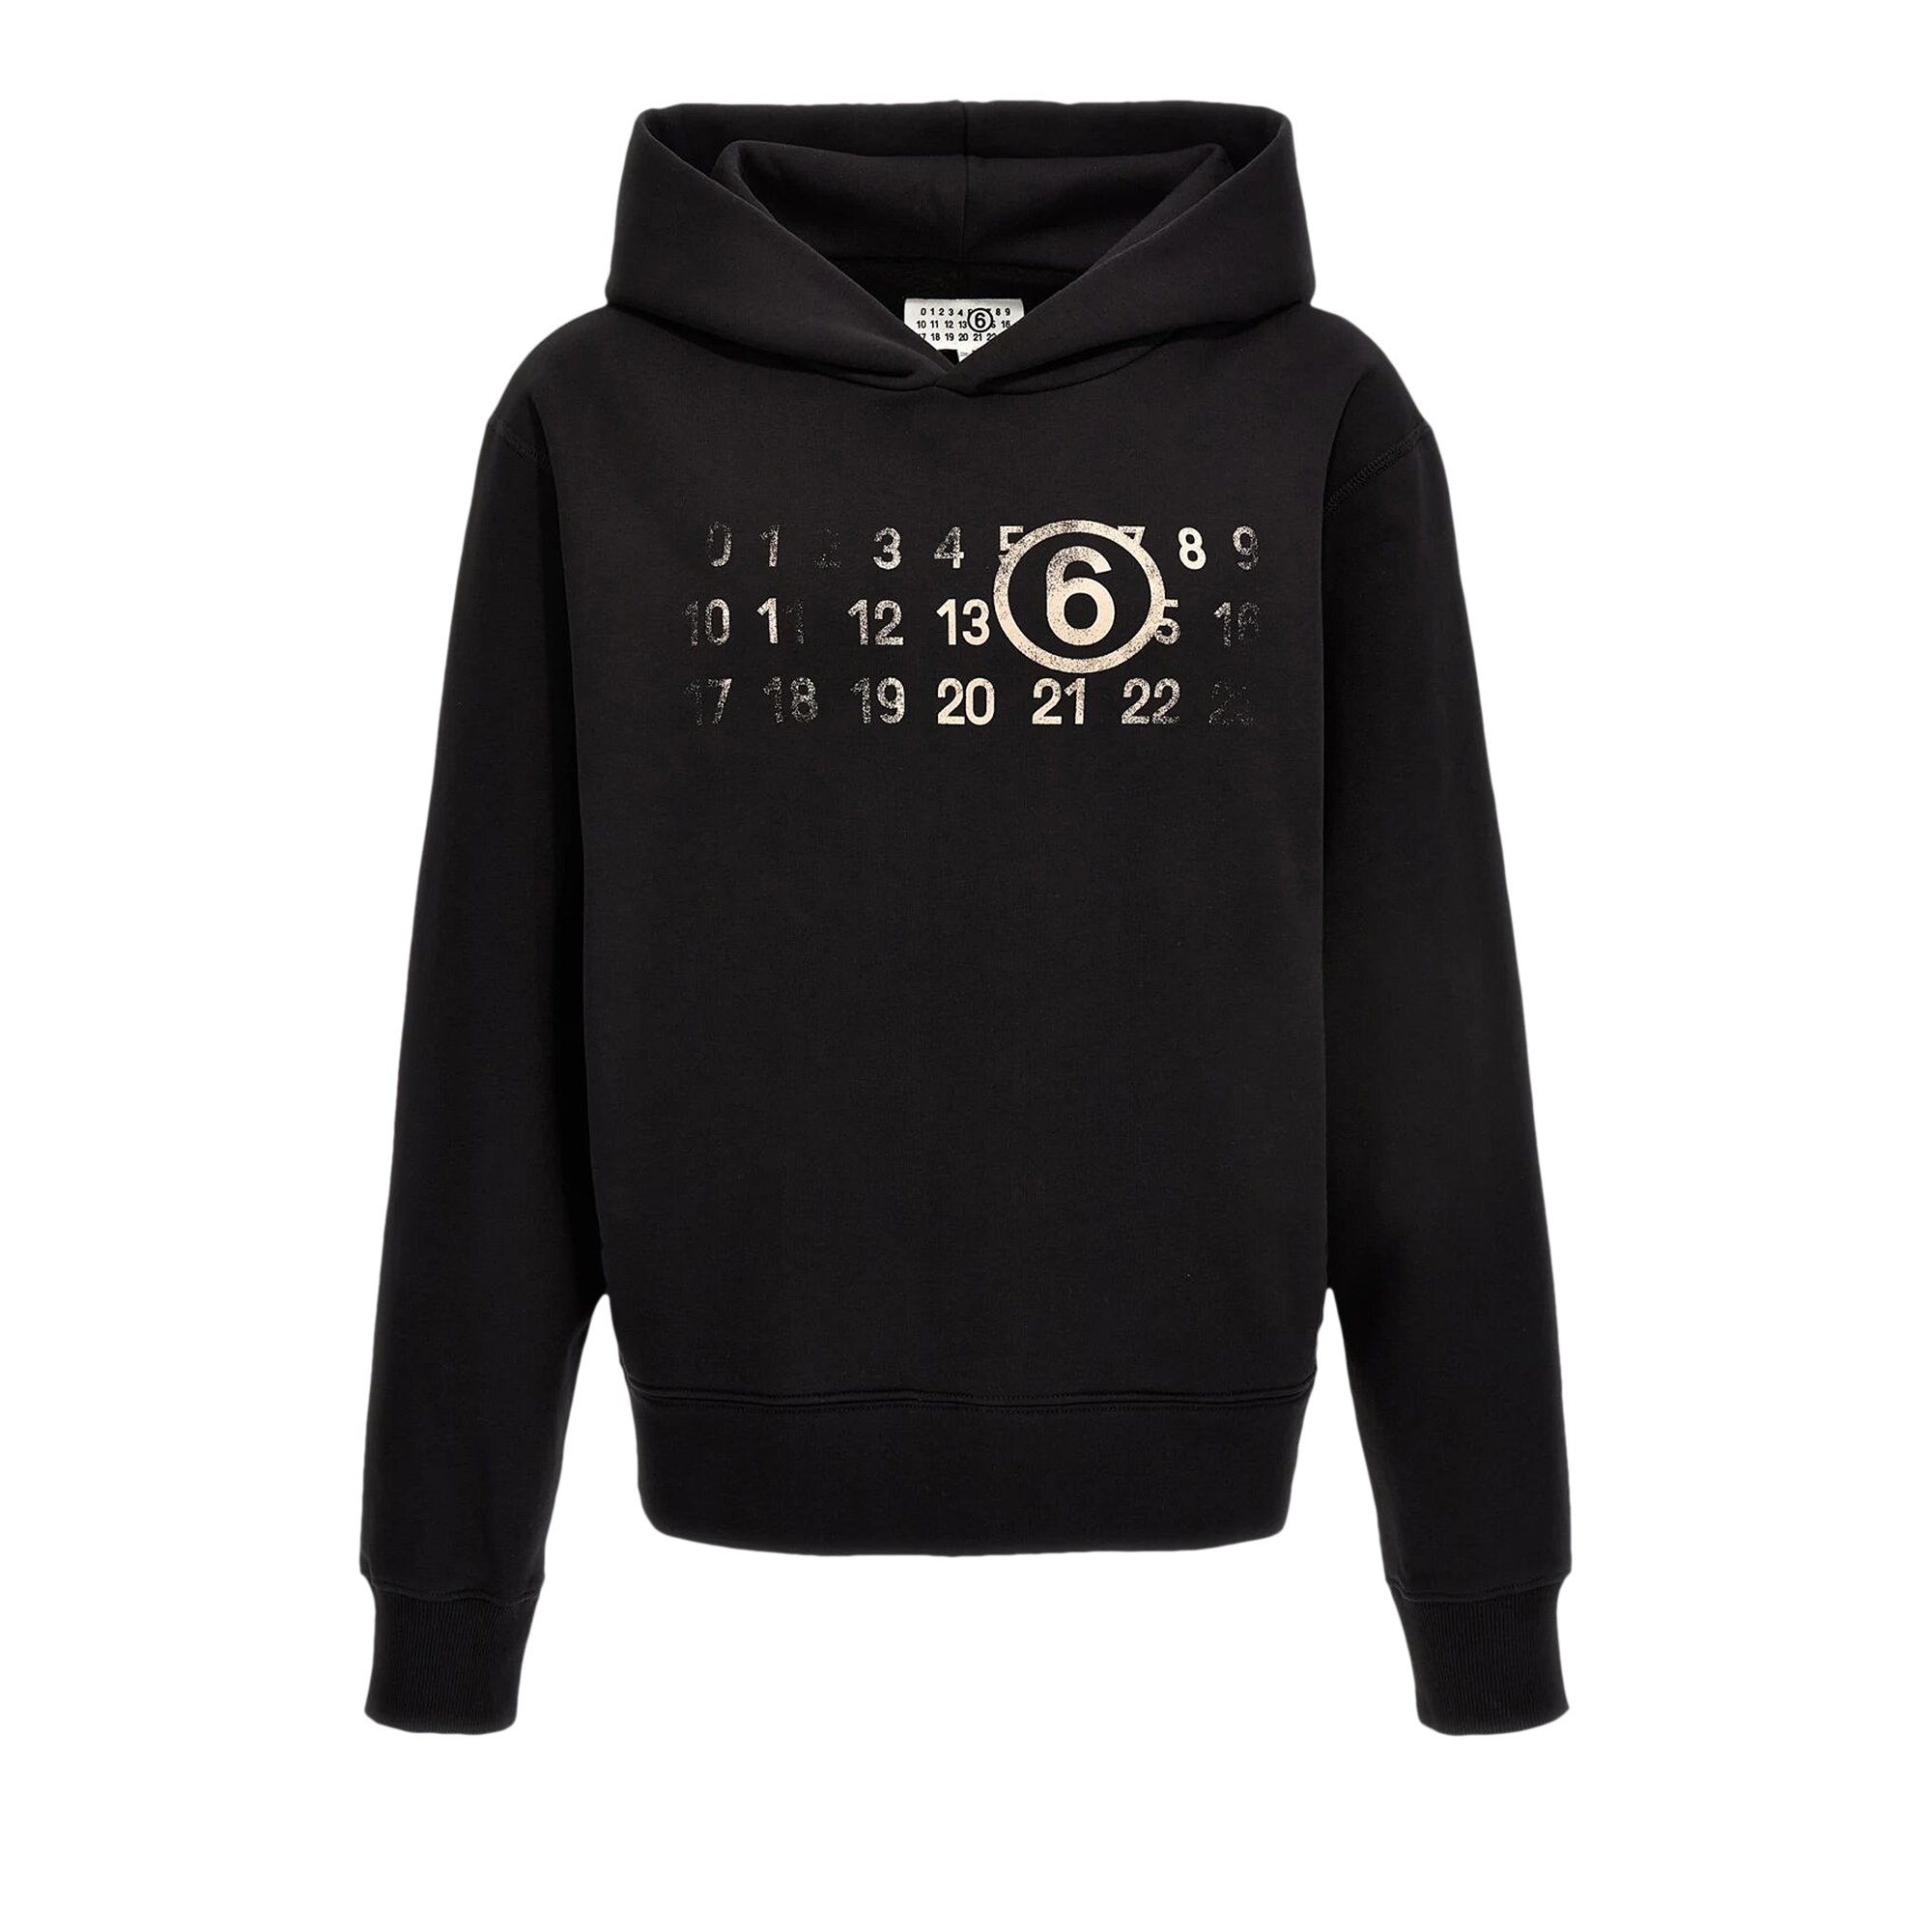 Buy MM6 Maison Margiela Sweatshirt 'Black' - S62GU0122 S25596 900